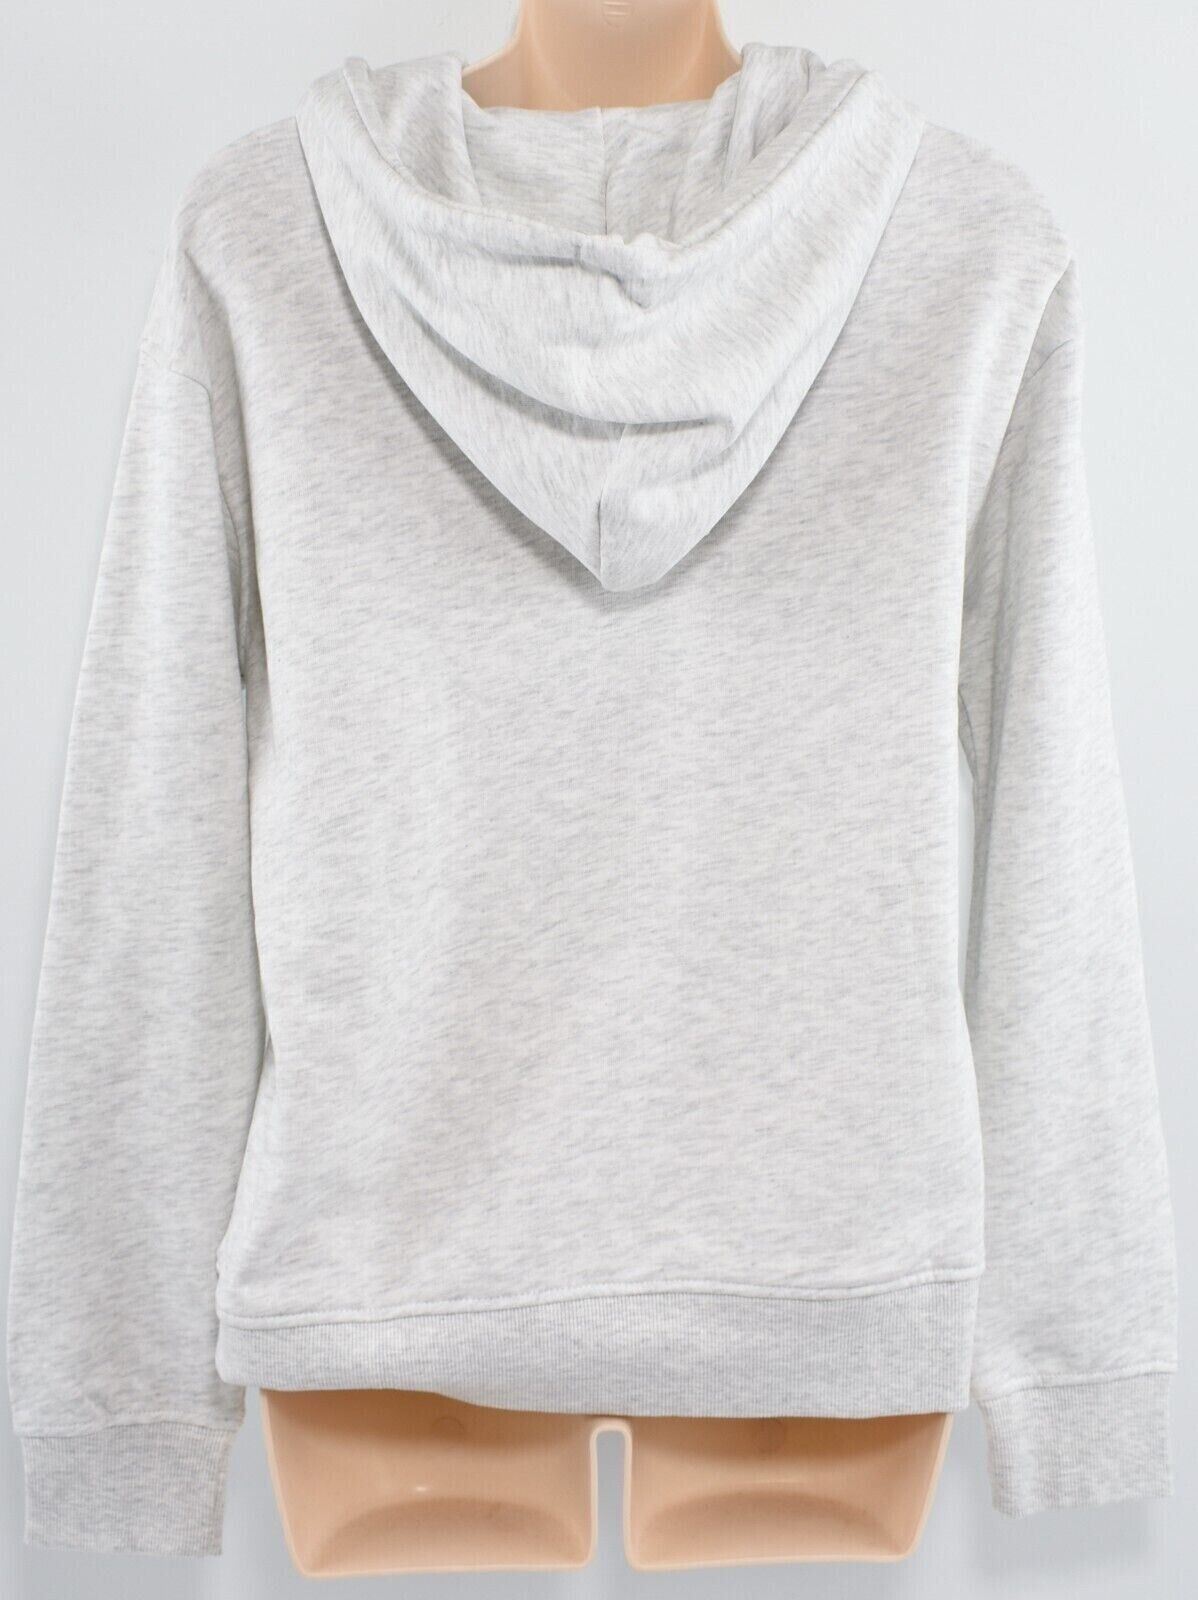 O'NEILL Women's CUBE Hoodie, Hooded Sweatshirt, White/Grey Melange, size M /12